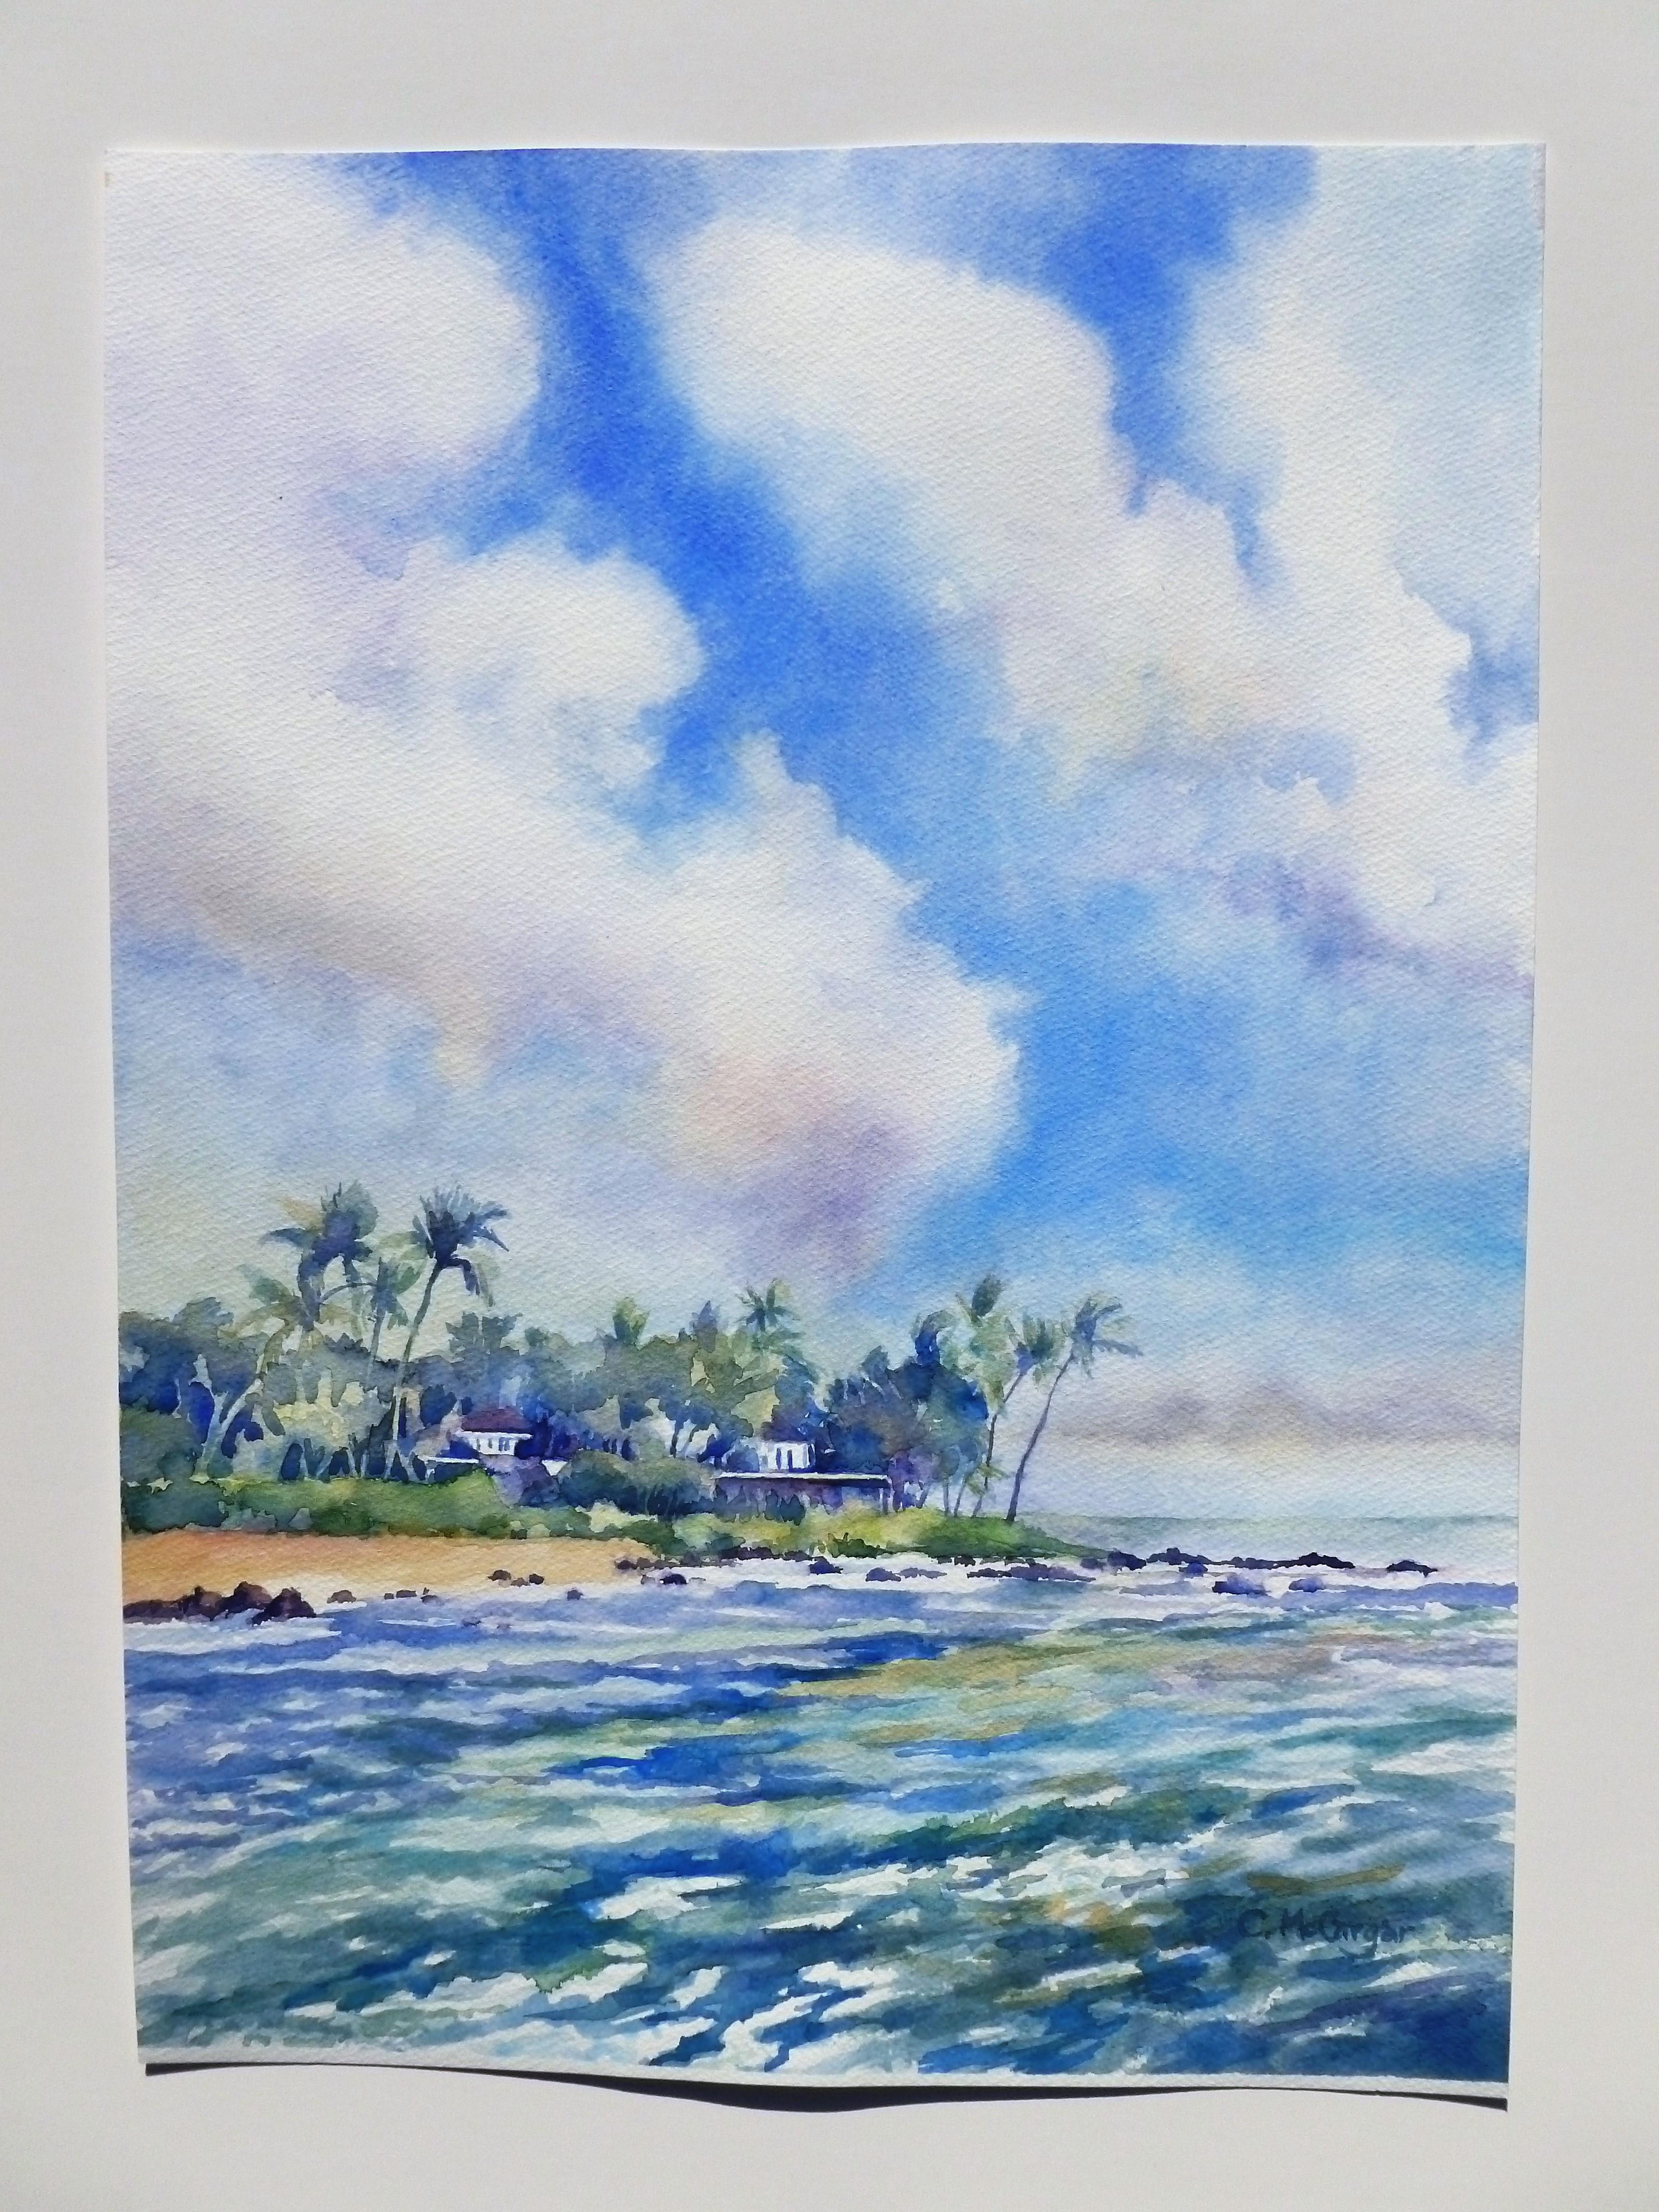 Kauai Catherine McCargar, Watercolor painting on paper 2